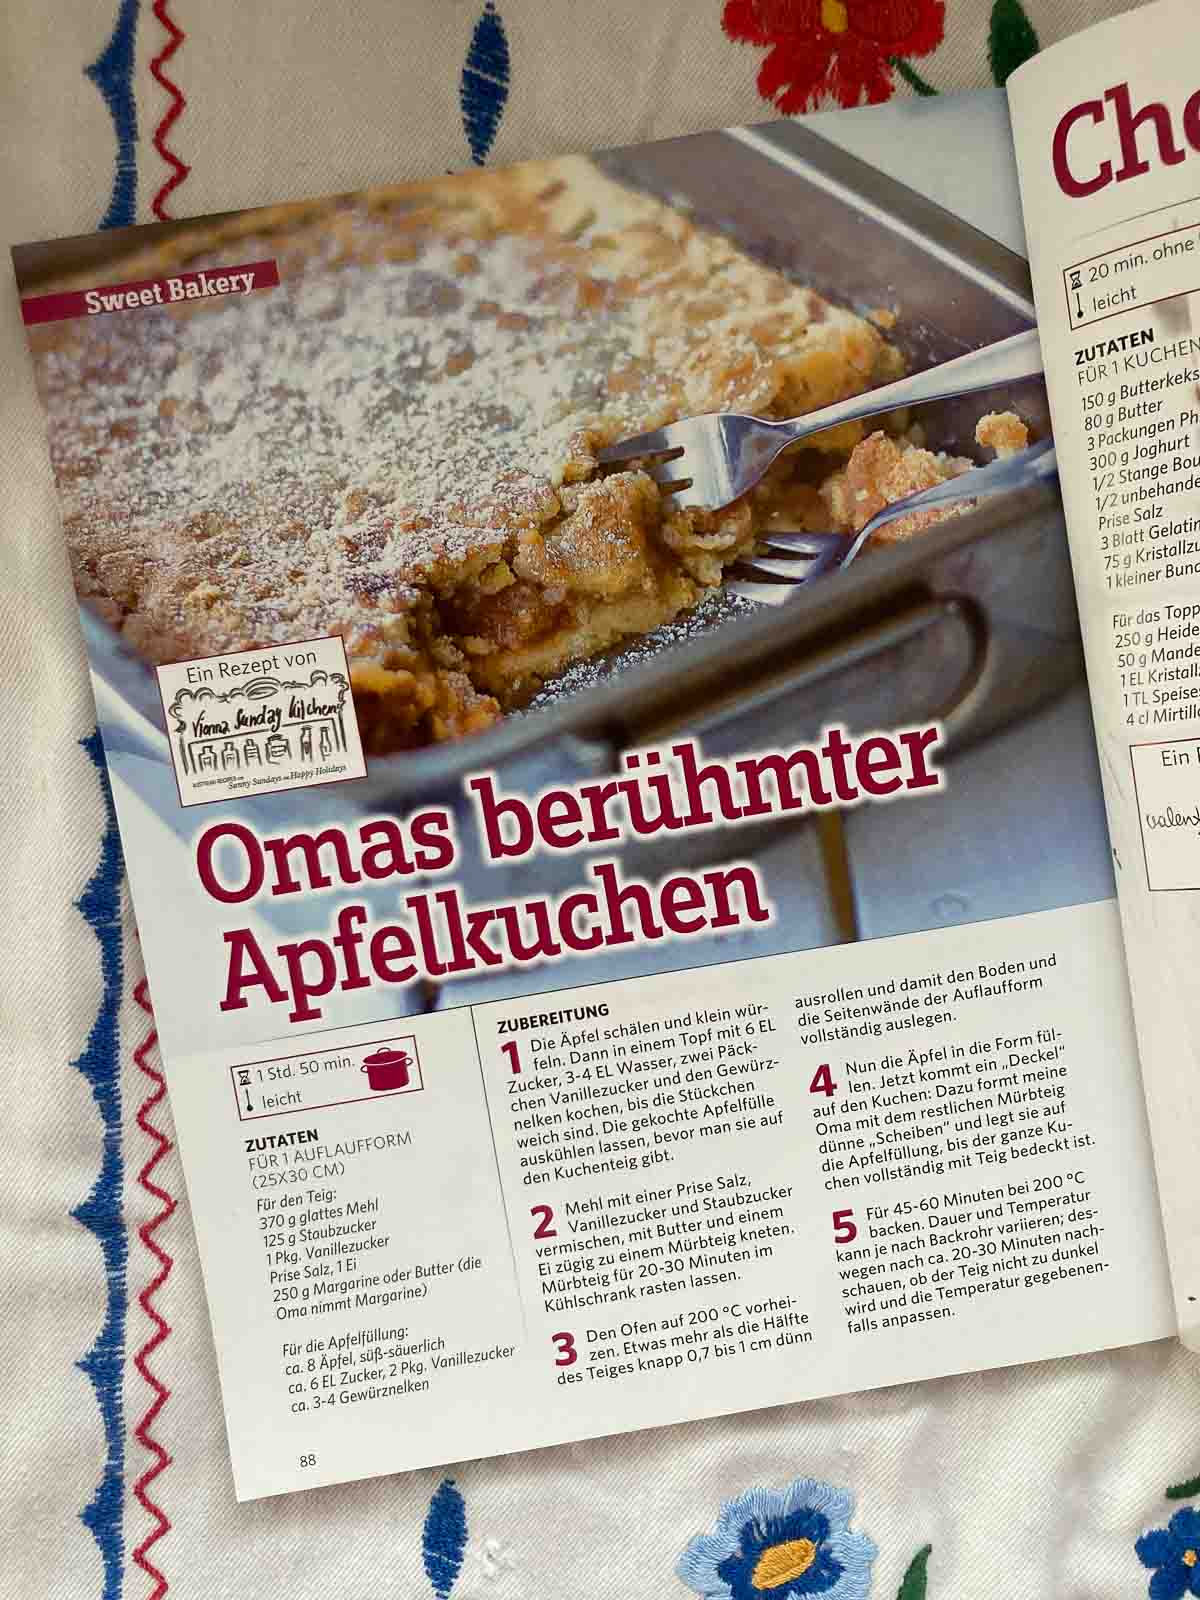 Omas berühmter Apfelkuchen im Foodblogger Kochbuch vom Cooking Magazin